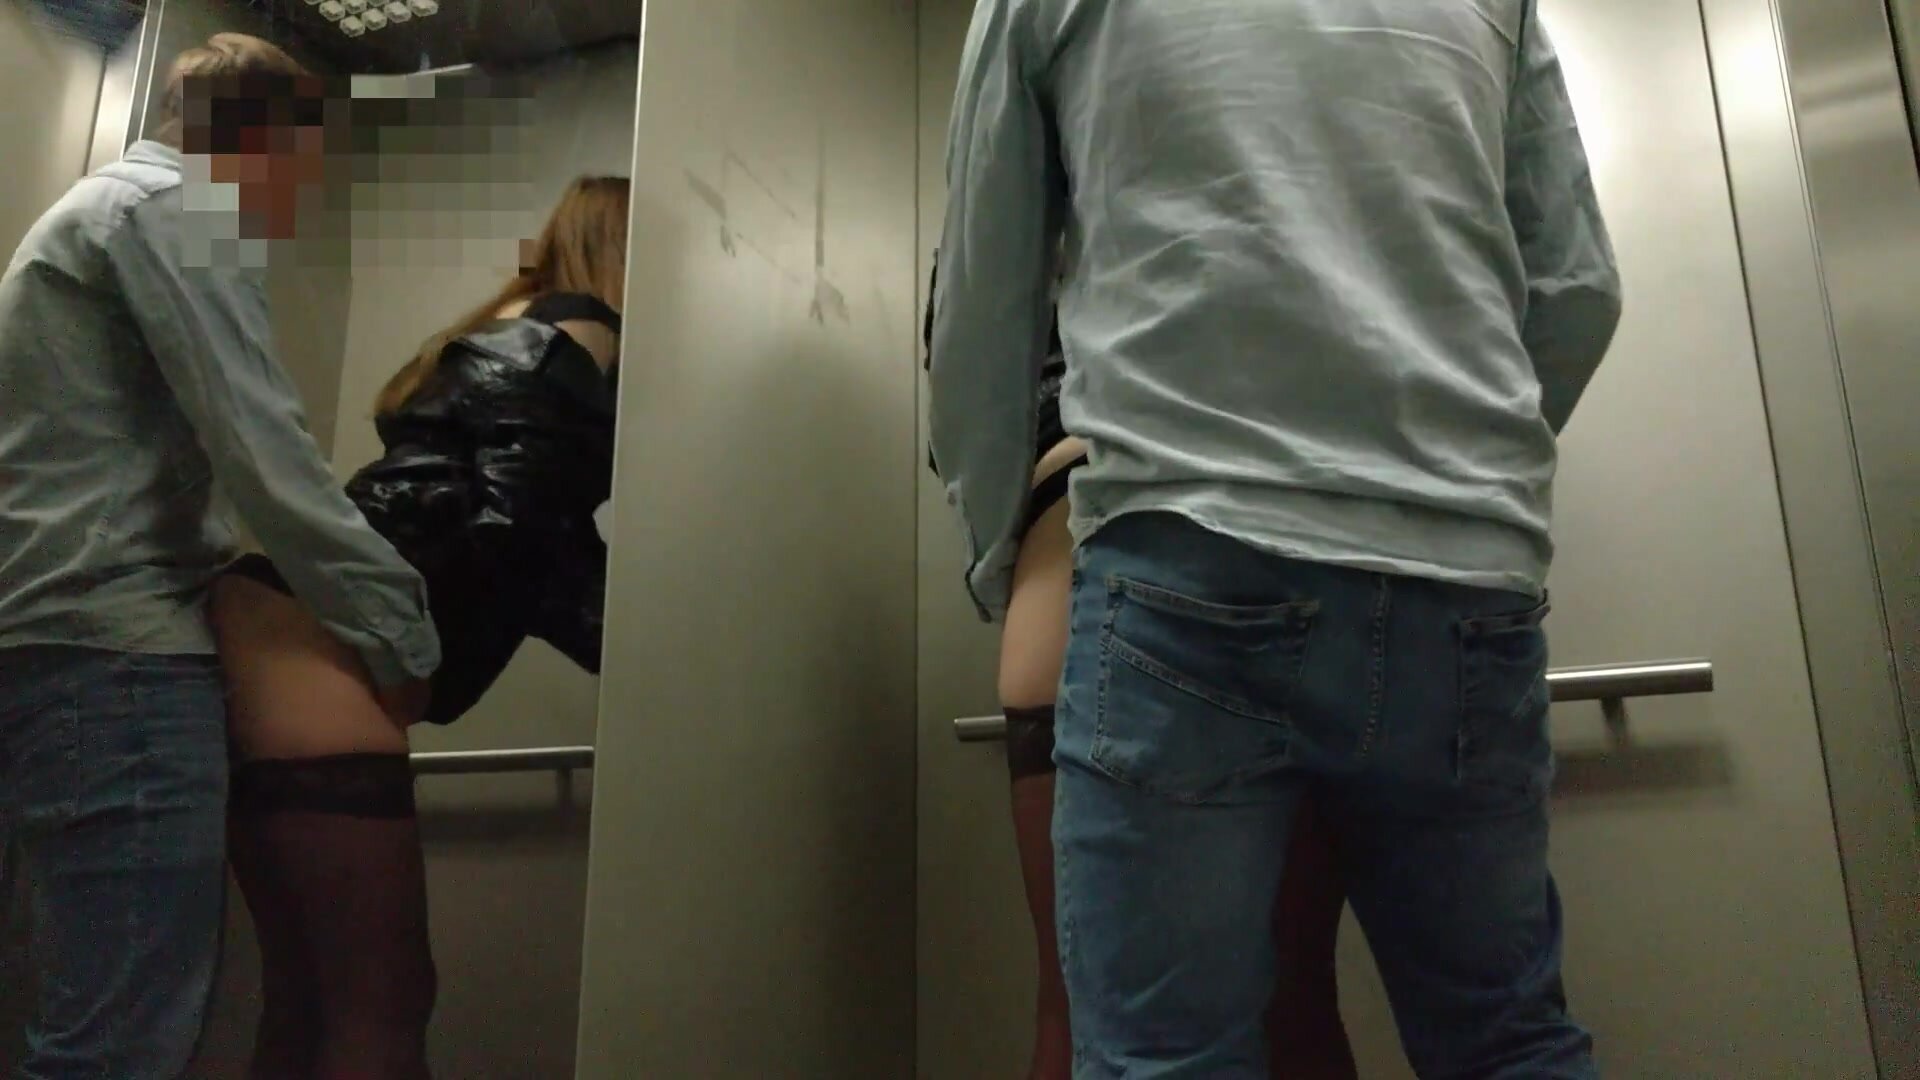 Pareja voyeur hace sexo publico arriesgado en un ascensor imagen